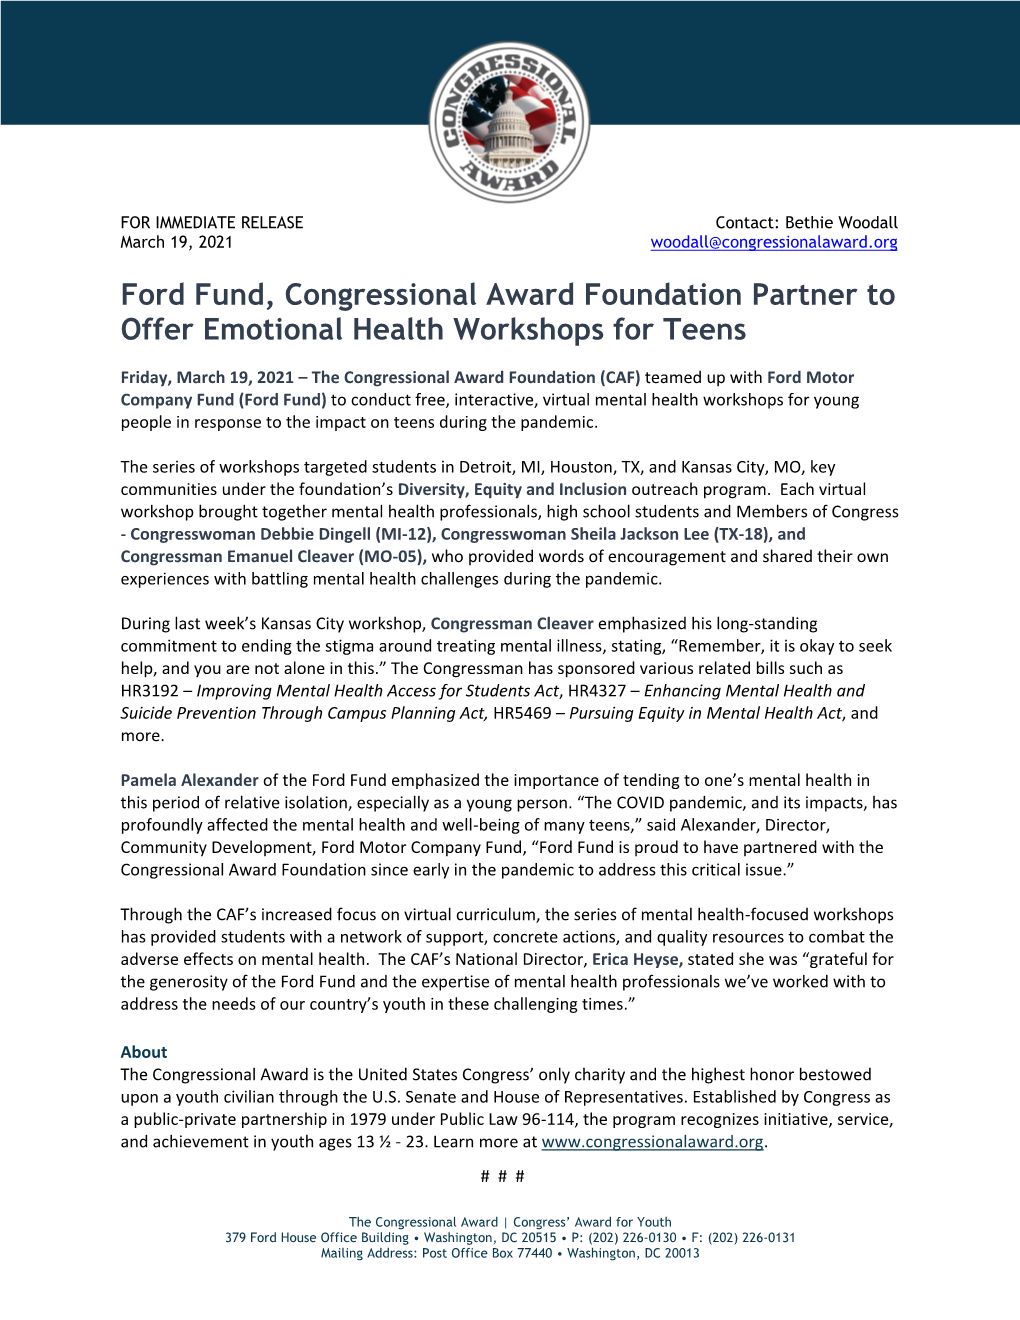 Ford Fund, Congressional Award Foundation Partner to Offer Emotional Health Workshops for Teens